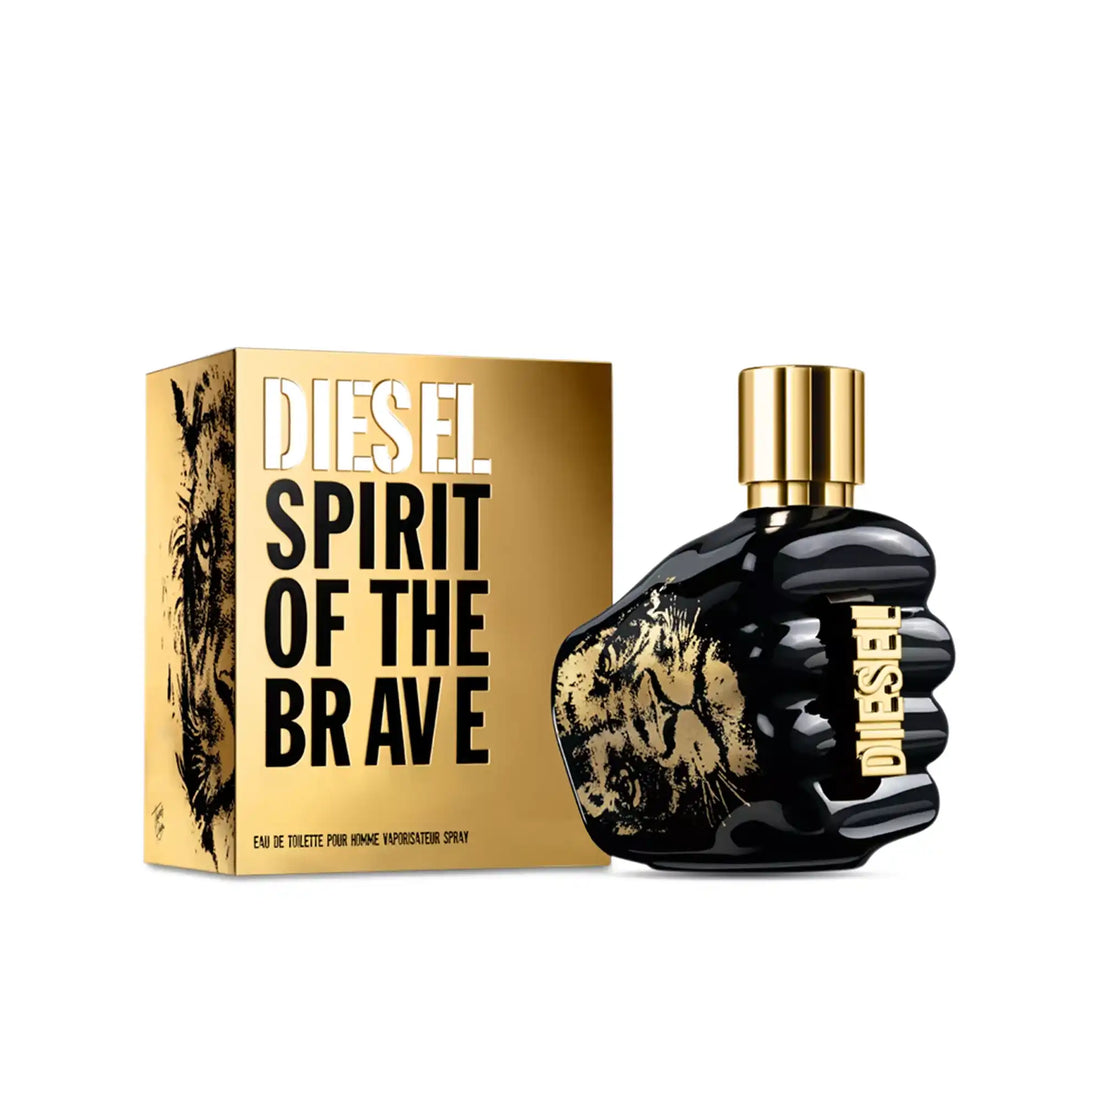 Diesel Spirit Of The Brave Eau de Toilette Spray 125ml Packaging